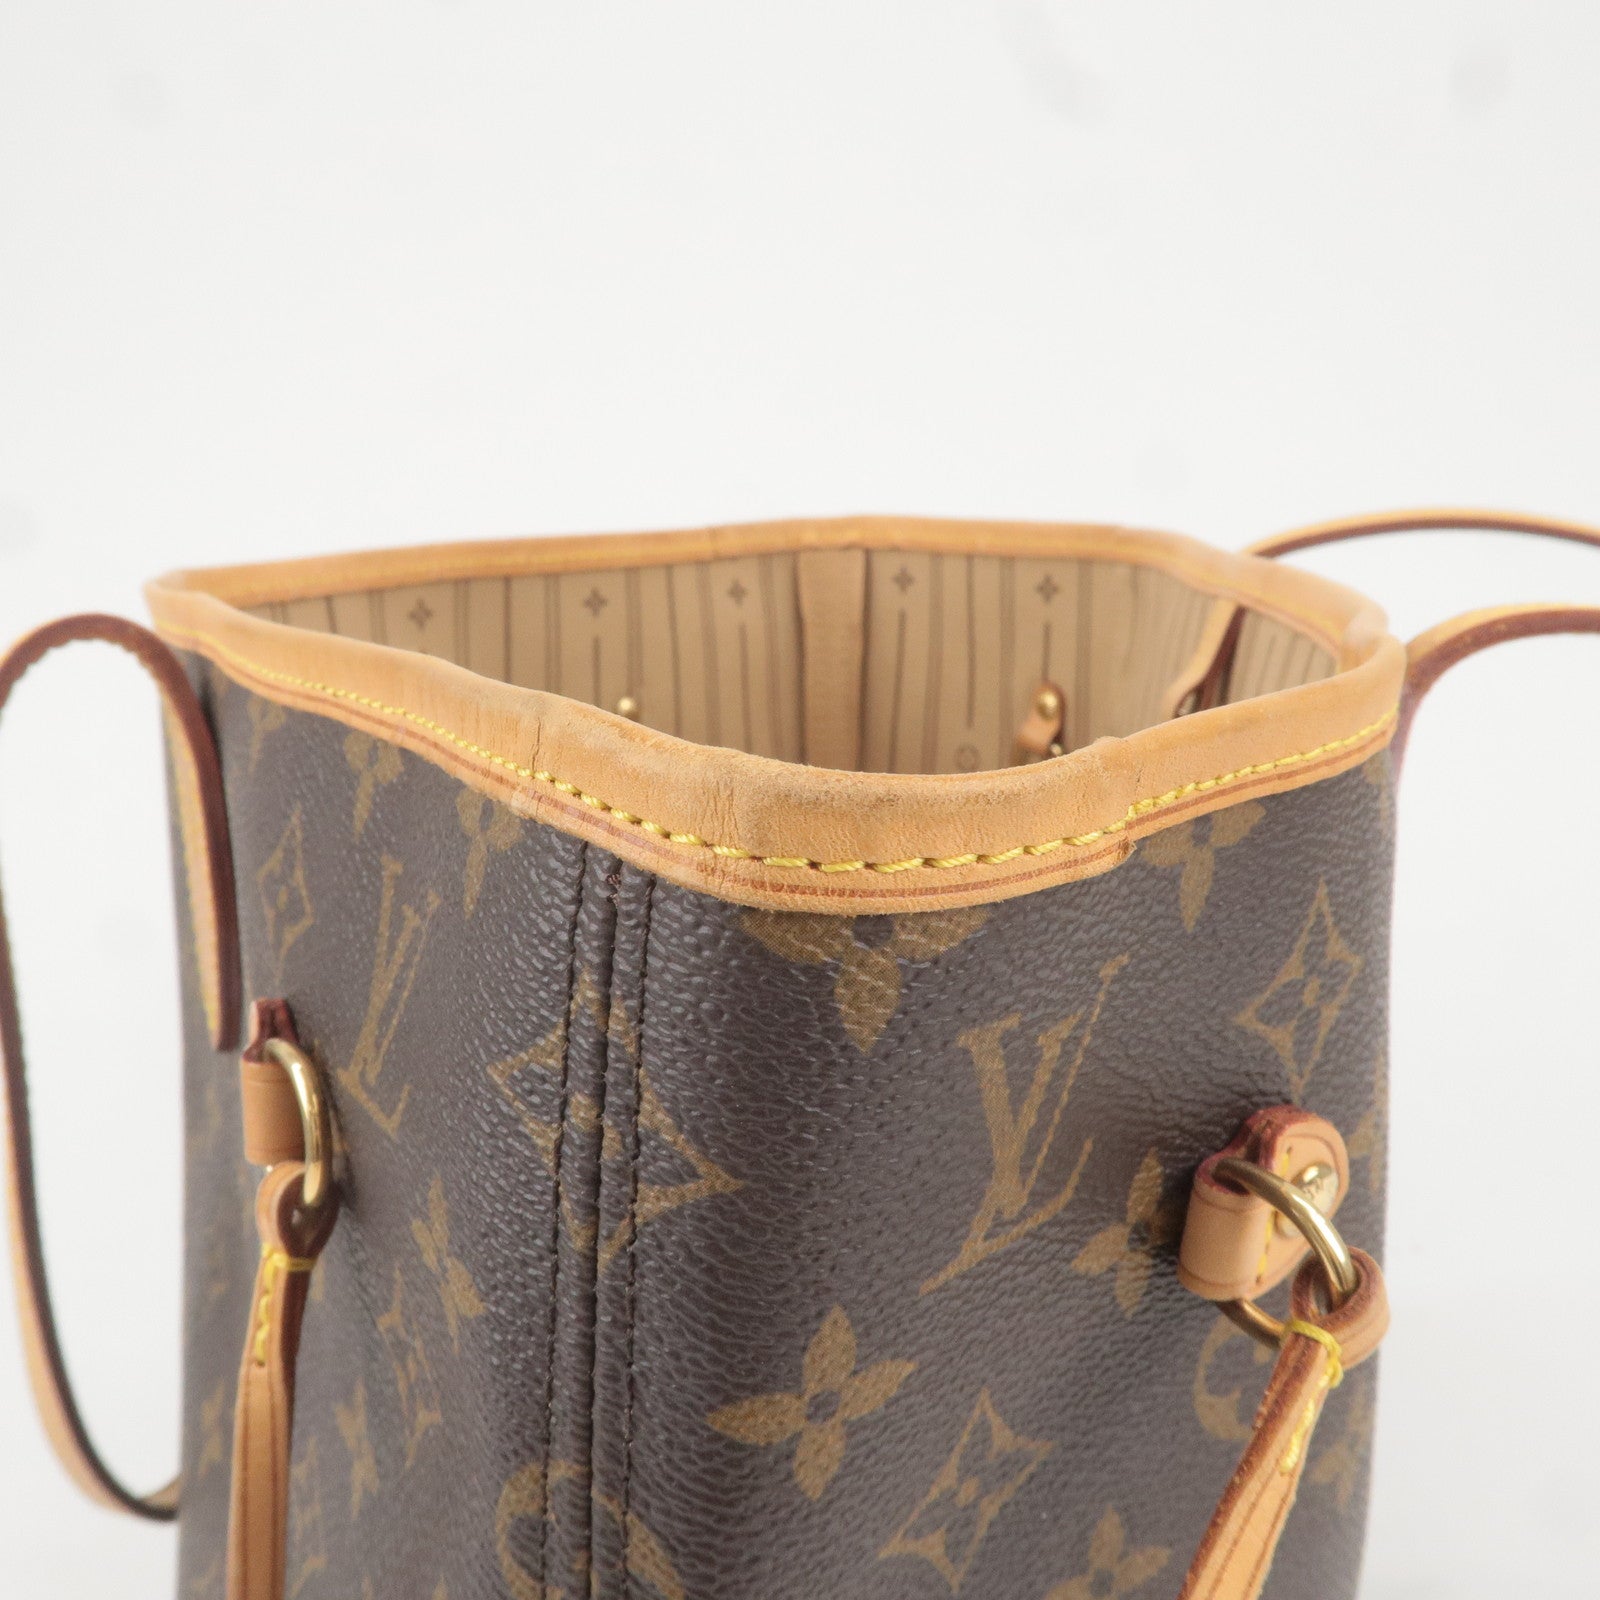 Louis Vuitton Tote Bag Neverfull MM Monogram M40156 Ladies Louis